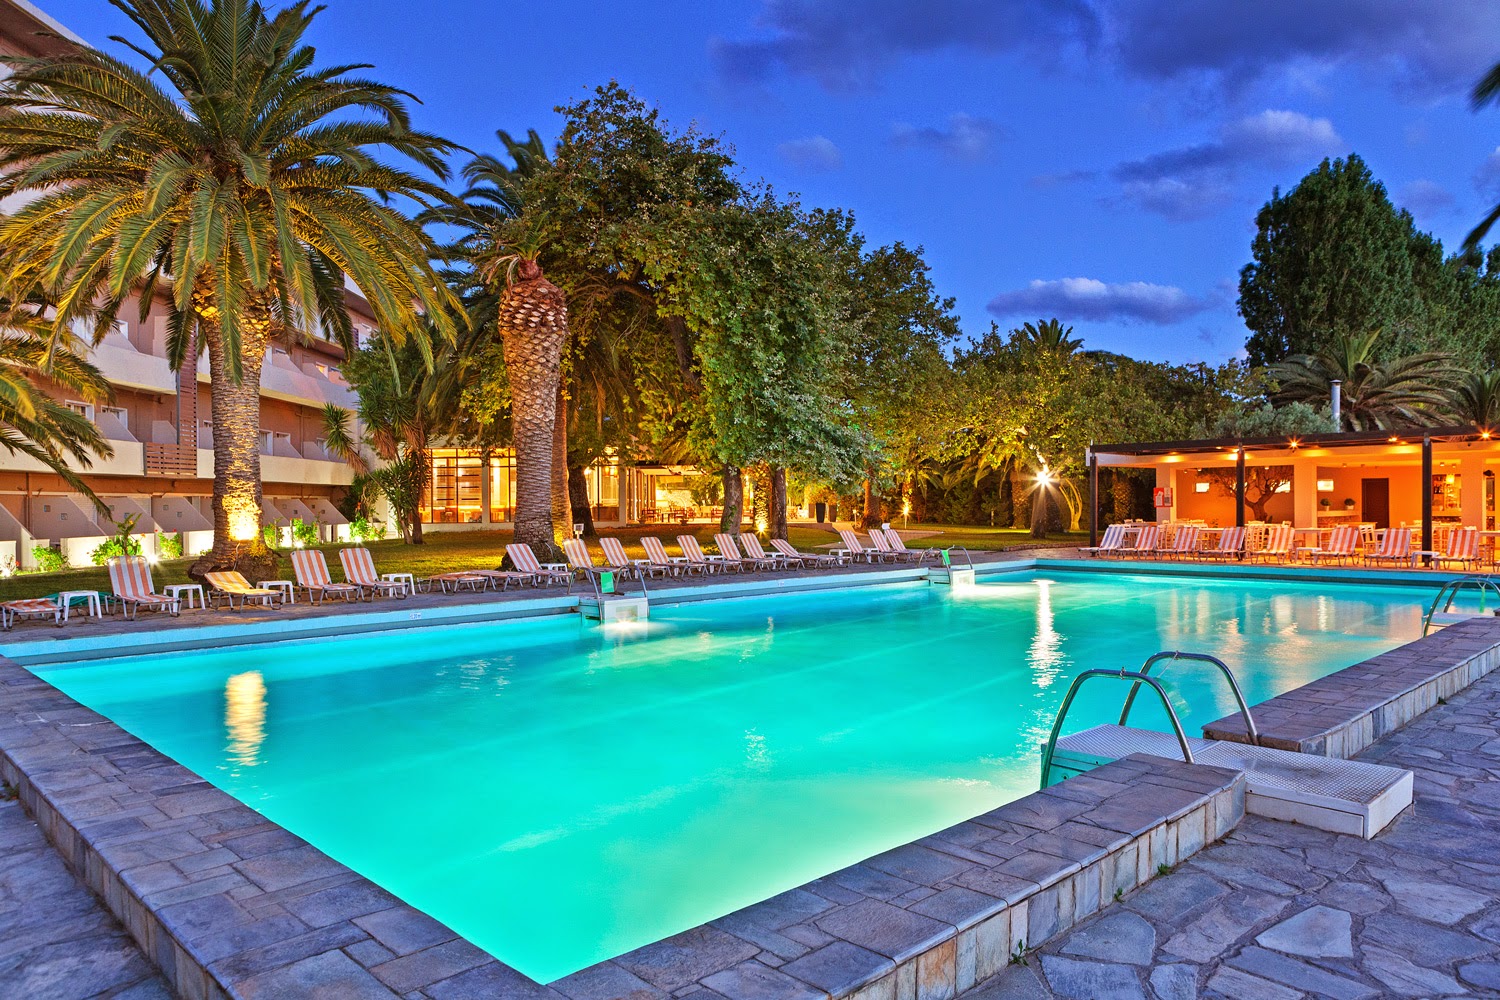 4* Long Beach Resort Hotel - Αίγιο ✦ -40% ✦ 3 Ημέρες (2 Διανυκτερεύσεις) ✦ 2 άτομα + 1 παιδί έως 12 ετών ✦ 12 ✦ 23/04/2023 έως 30/06/2023 και 01/09/2023 έως 30/09/2023 ✦ Μπροστά στην Παραλία!